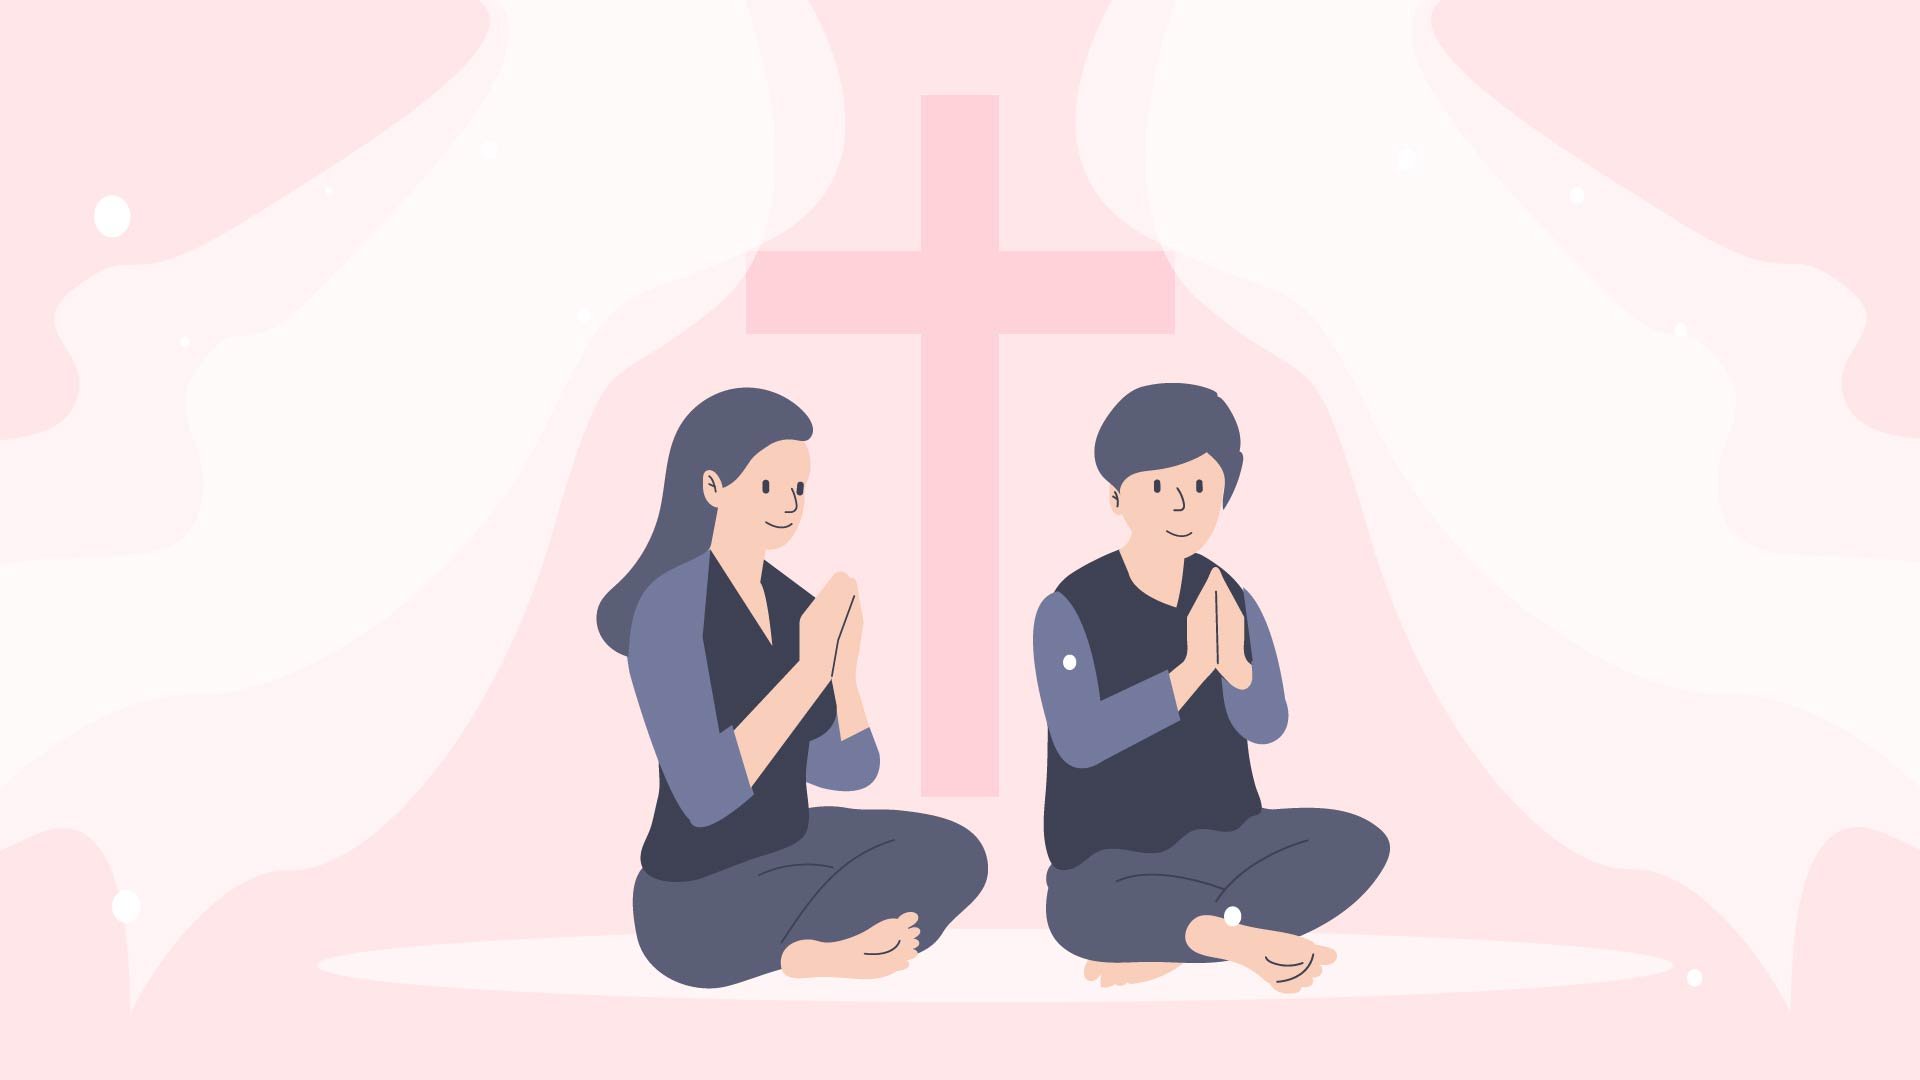 National Day of Prayer Cartoon Background in PDF, Illustrator, PSD, EPS, SVG, JPG, PNG